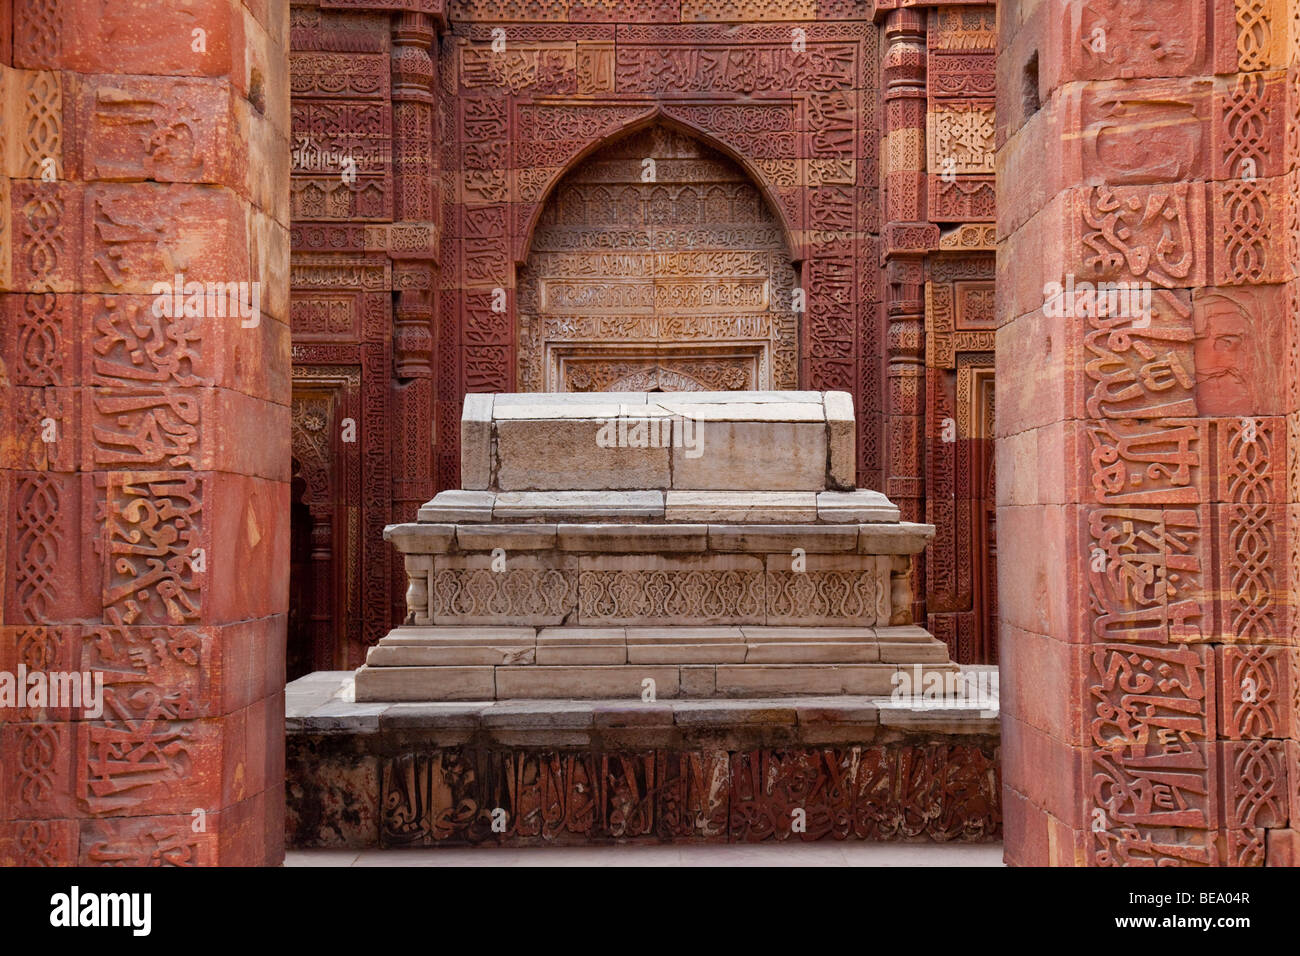 Iltutmish Grab am Qutb Minar in Delhi Indien Stockfoto